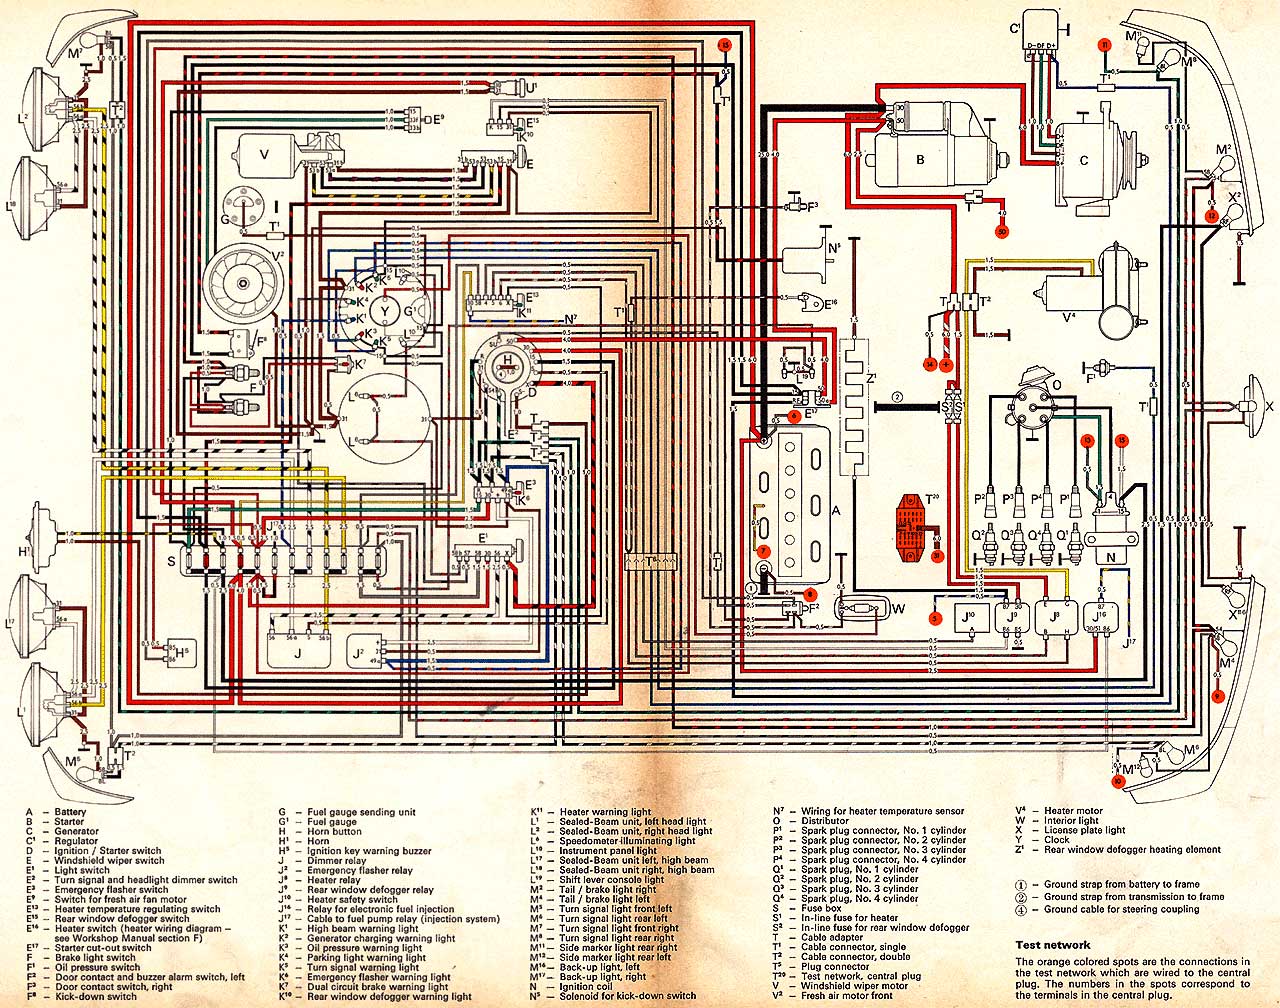 Wiring Diagrams — www.type4.org